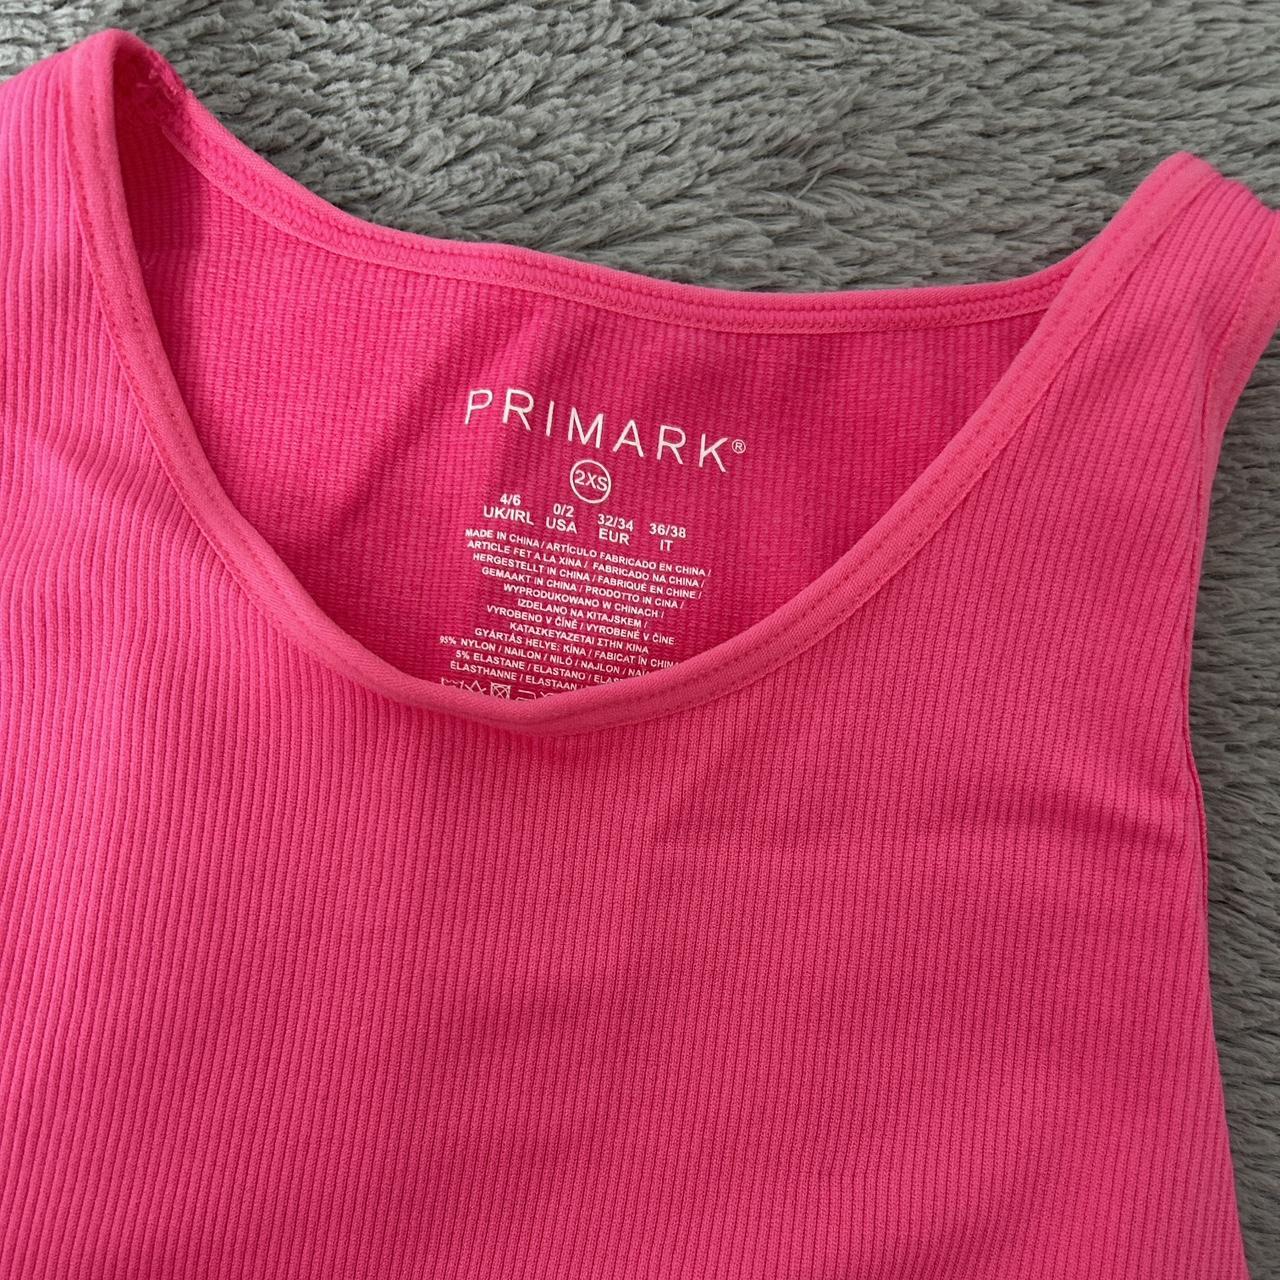 Pink seamless primark top